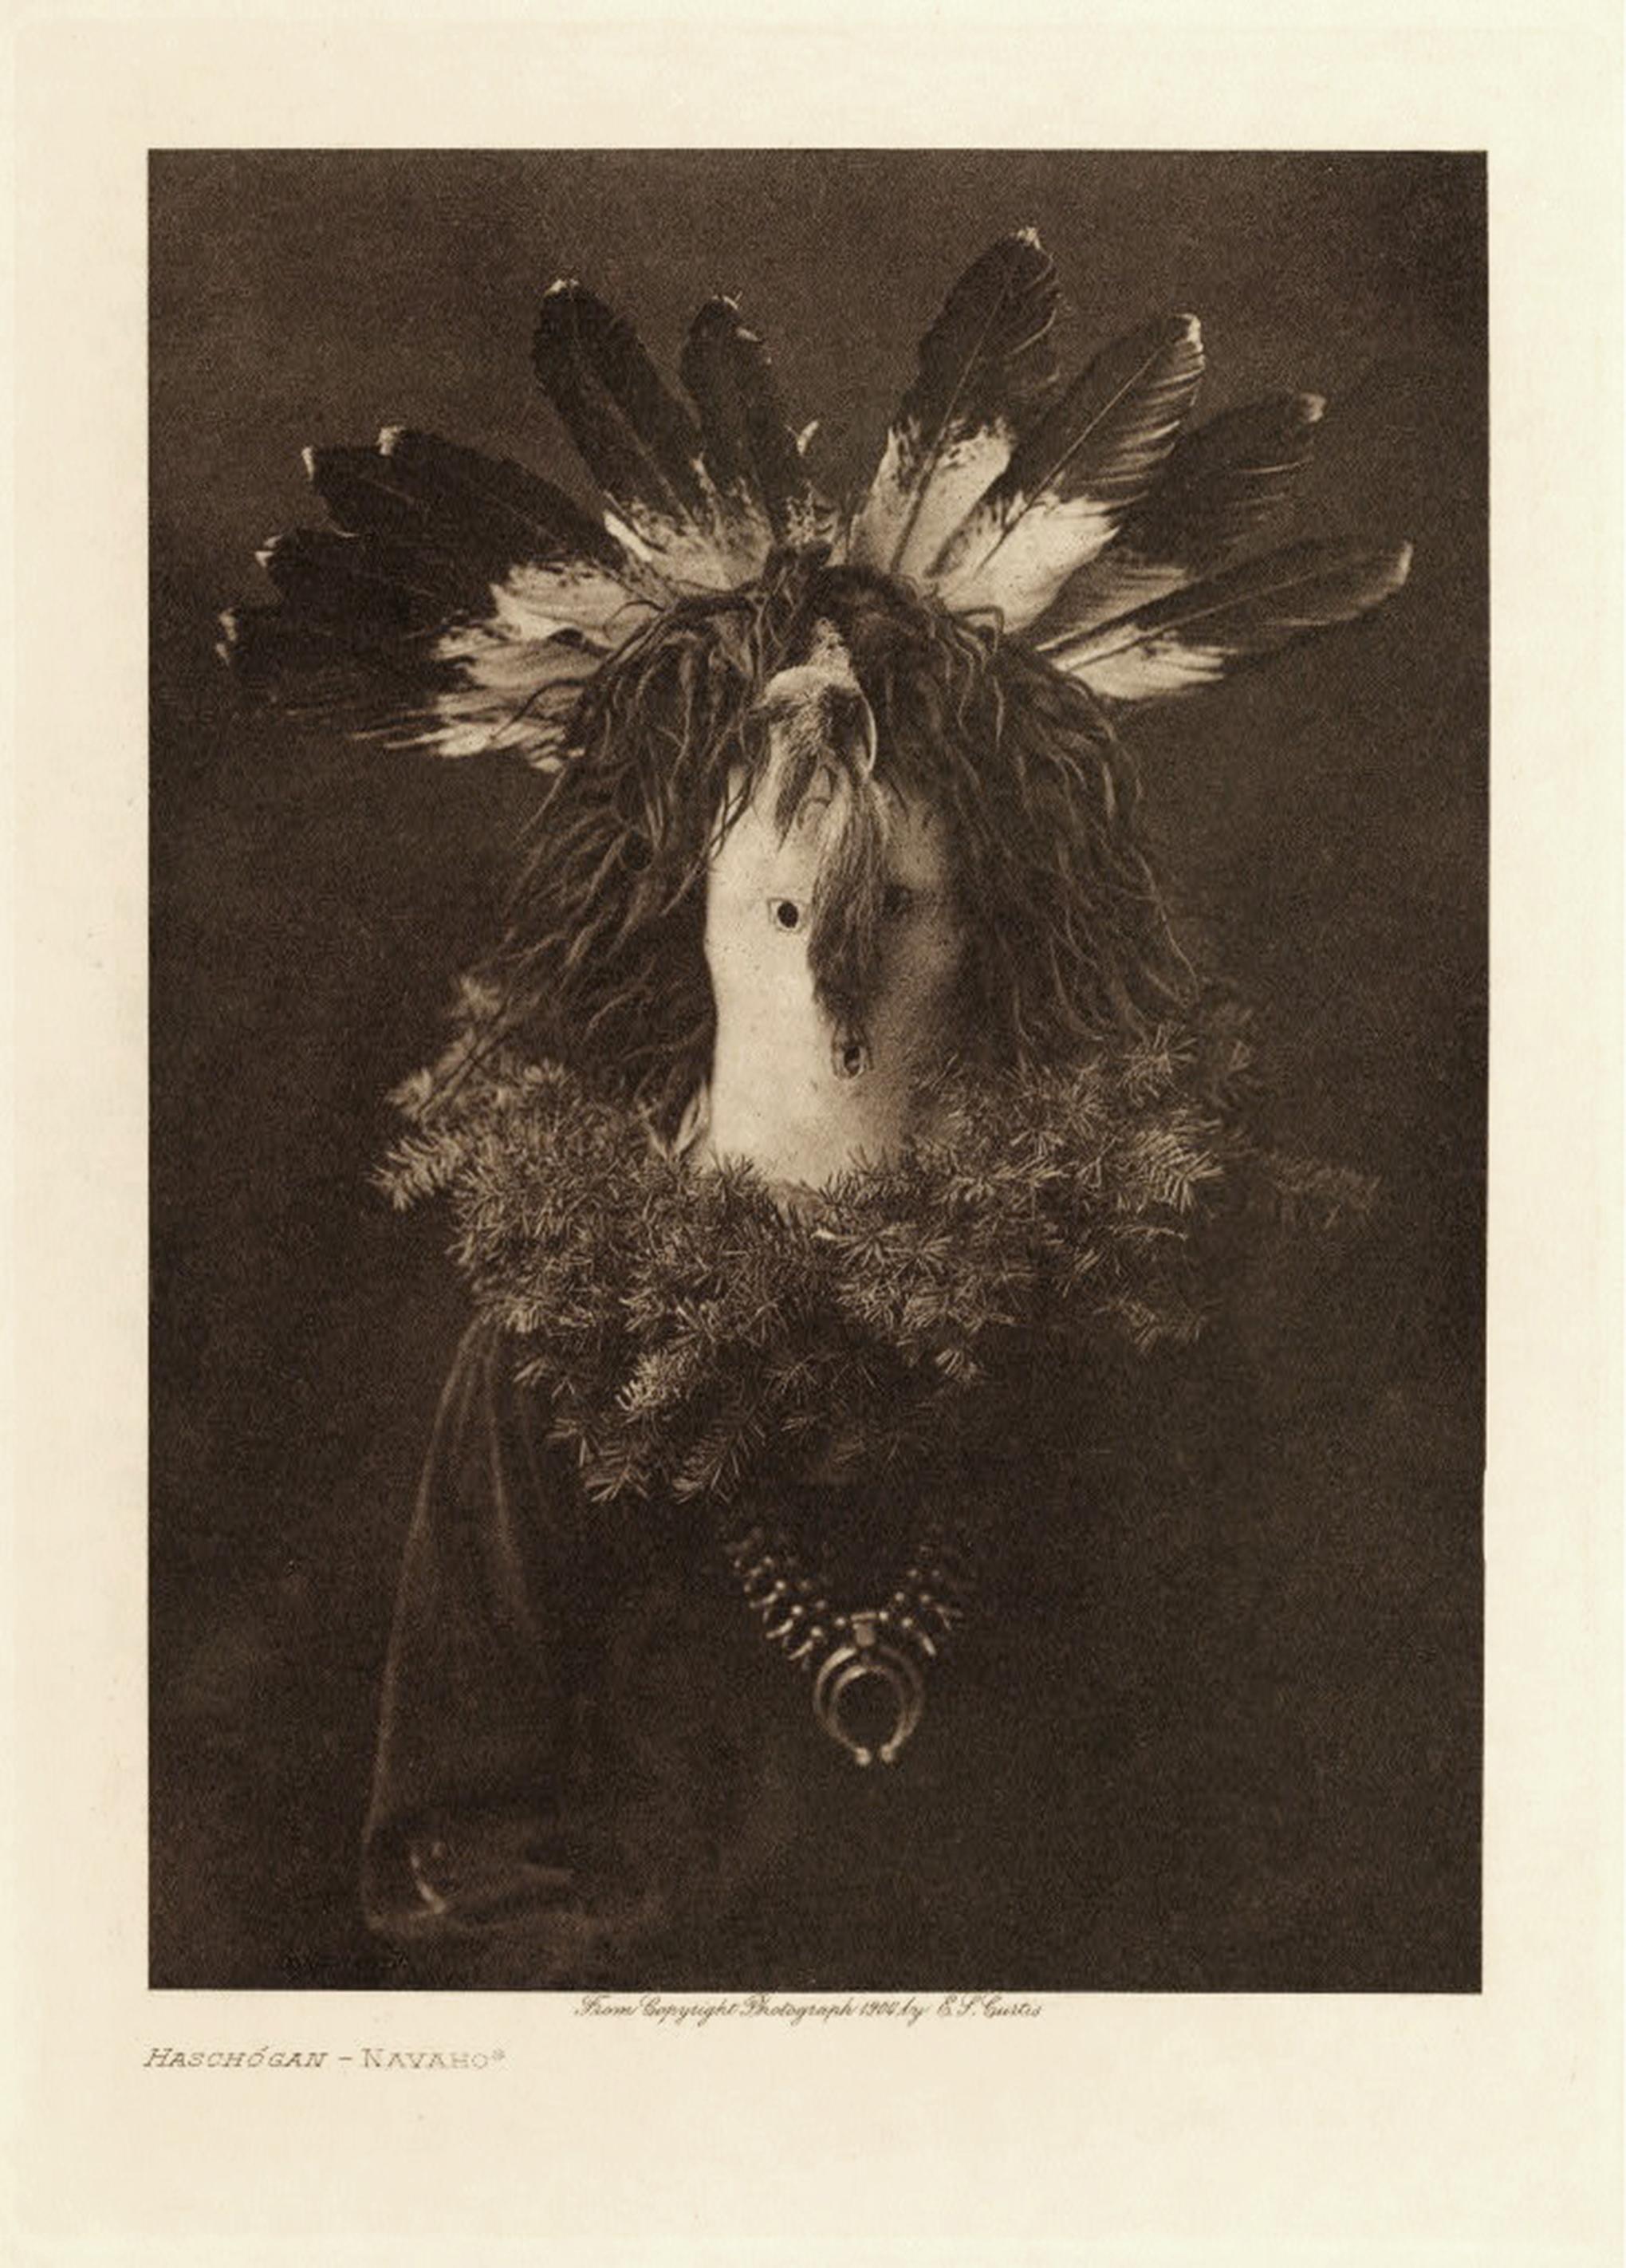 Edward Sheriff Curtis Portrait Photograph - Haschogan - Navaho, House God. 1904.